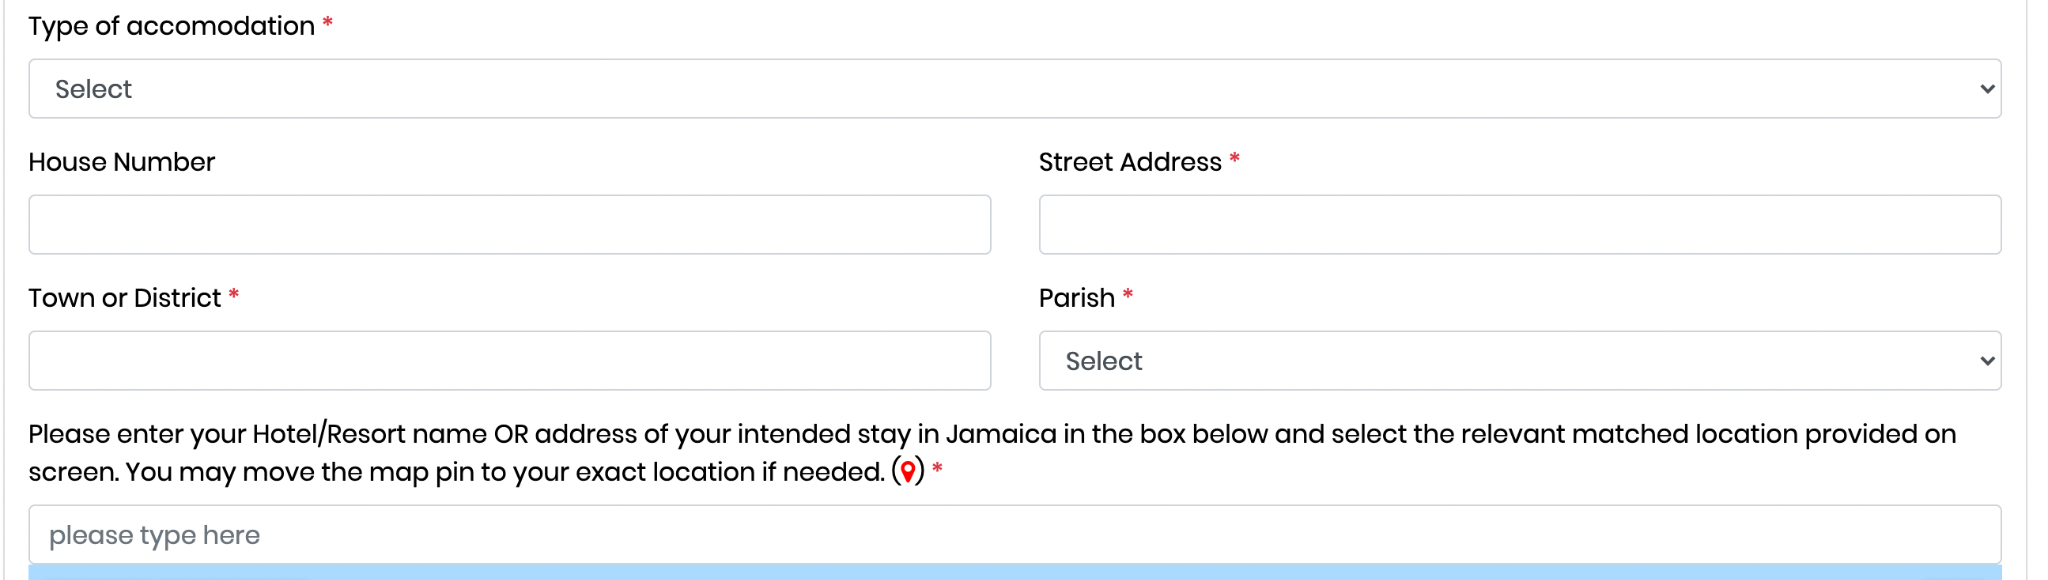 travel to jamaica authorization form